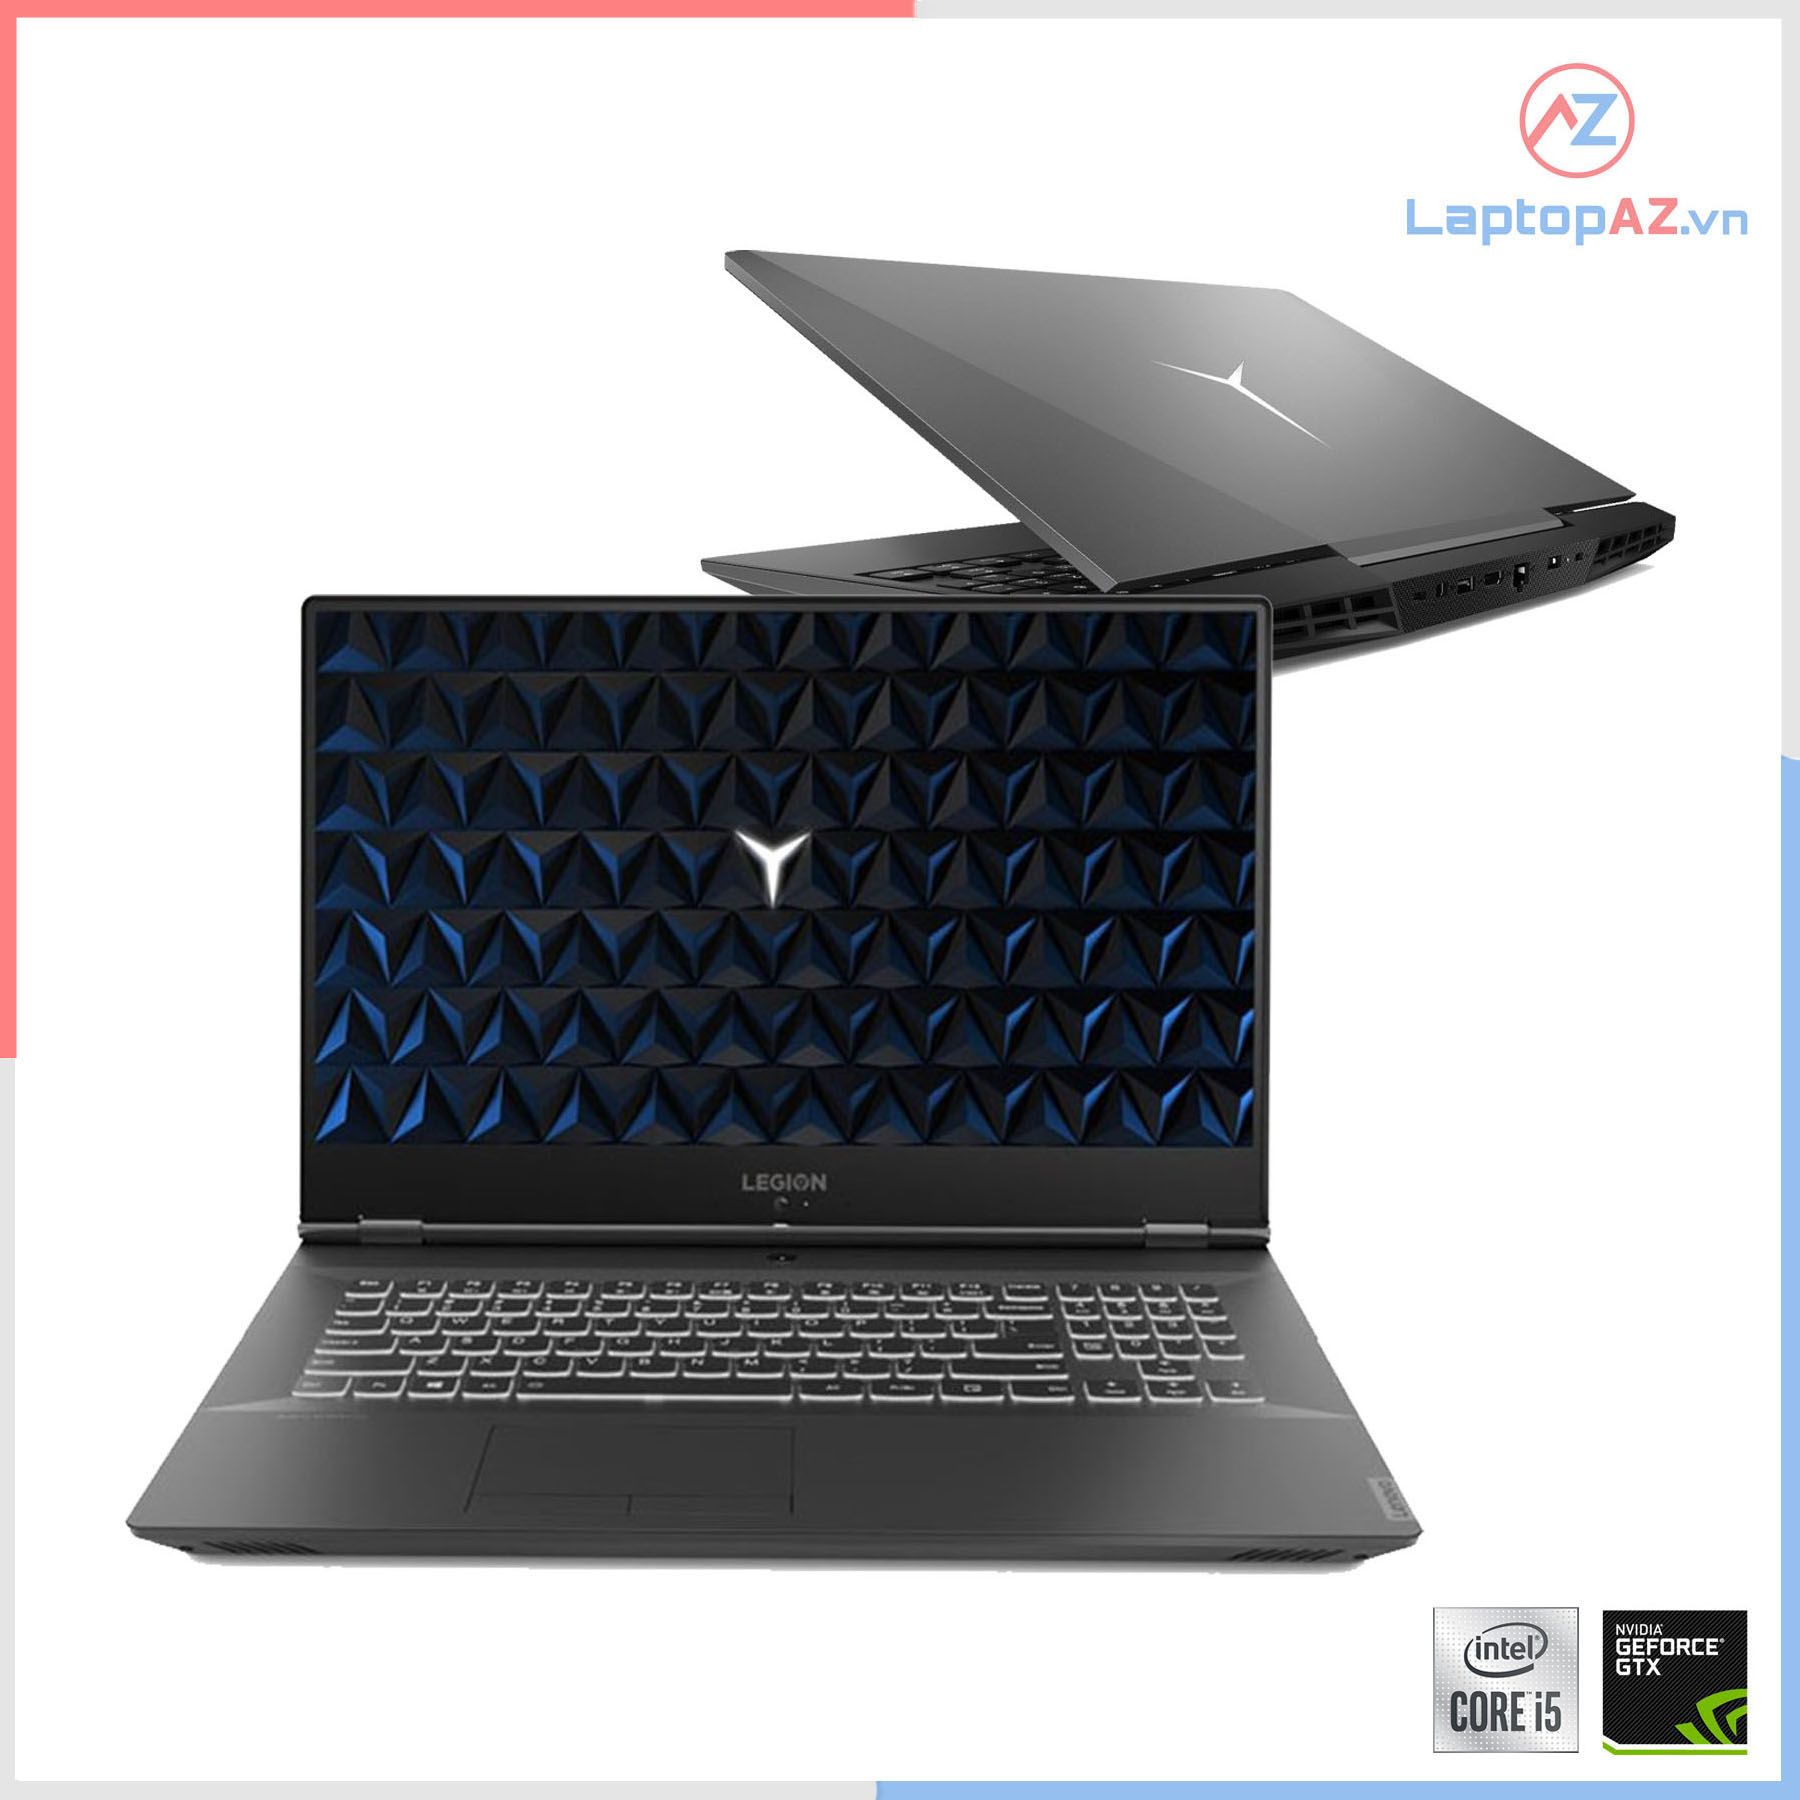 Laptop Lenovo Legion Y7000 (Core i5-8300H, 8GB, 512GB, VGA 6GB NVIDIA GTX 1060, 15.6 inch, FHD IPS)